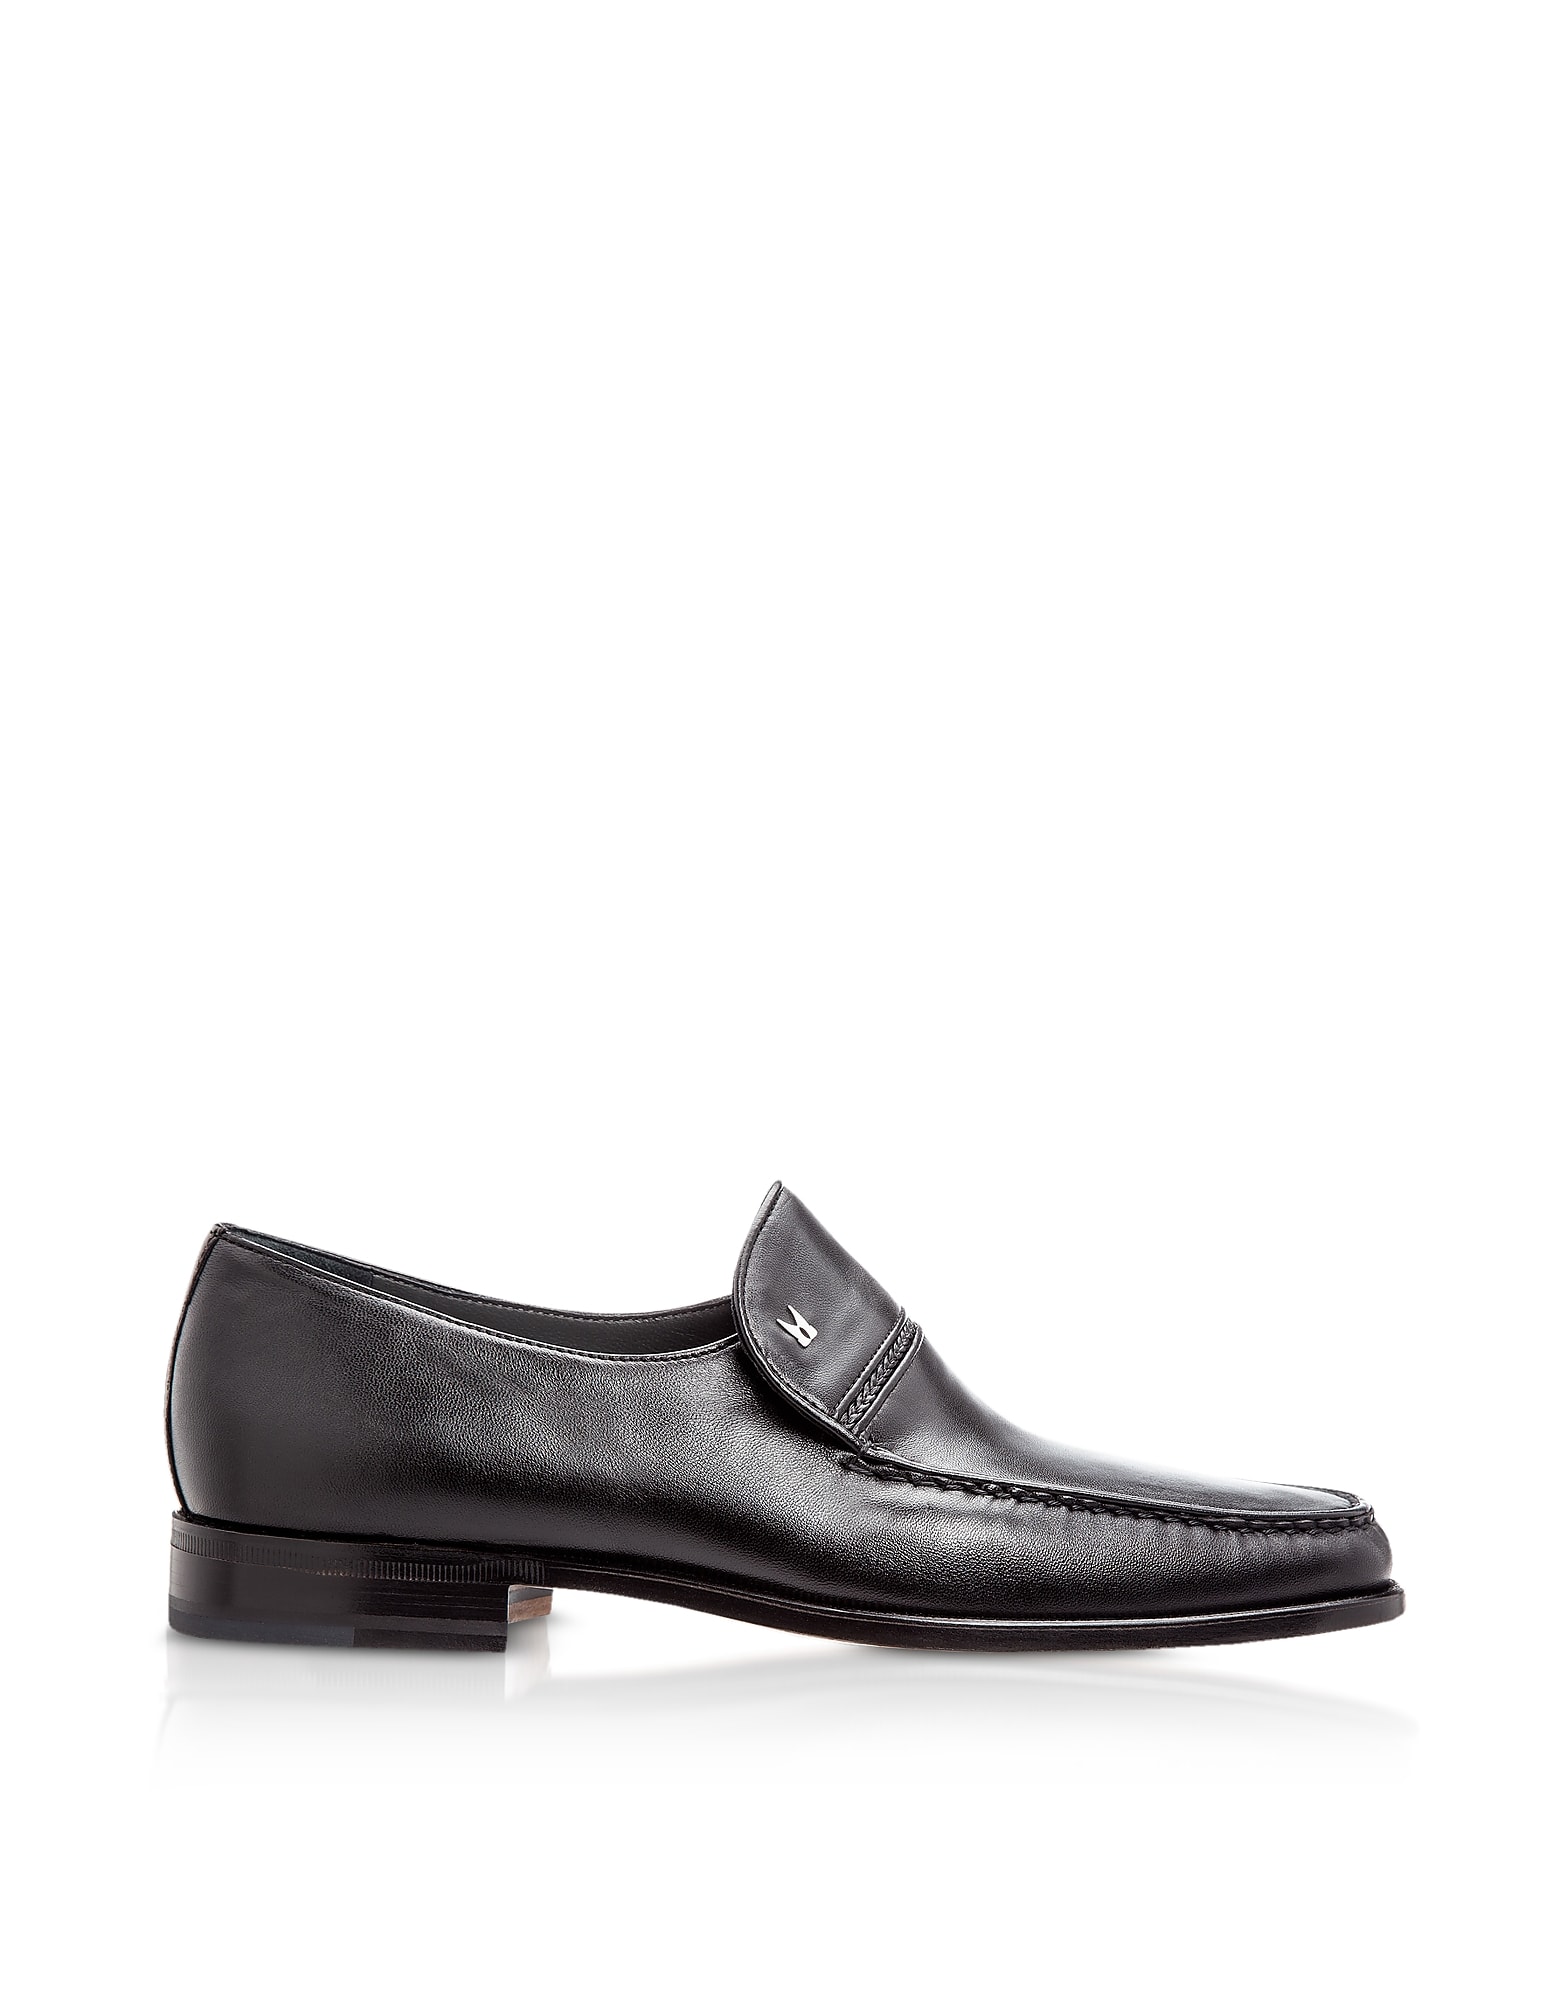 Moreschi Bonn Black Lambskin Loafer Shoes